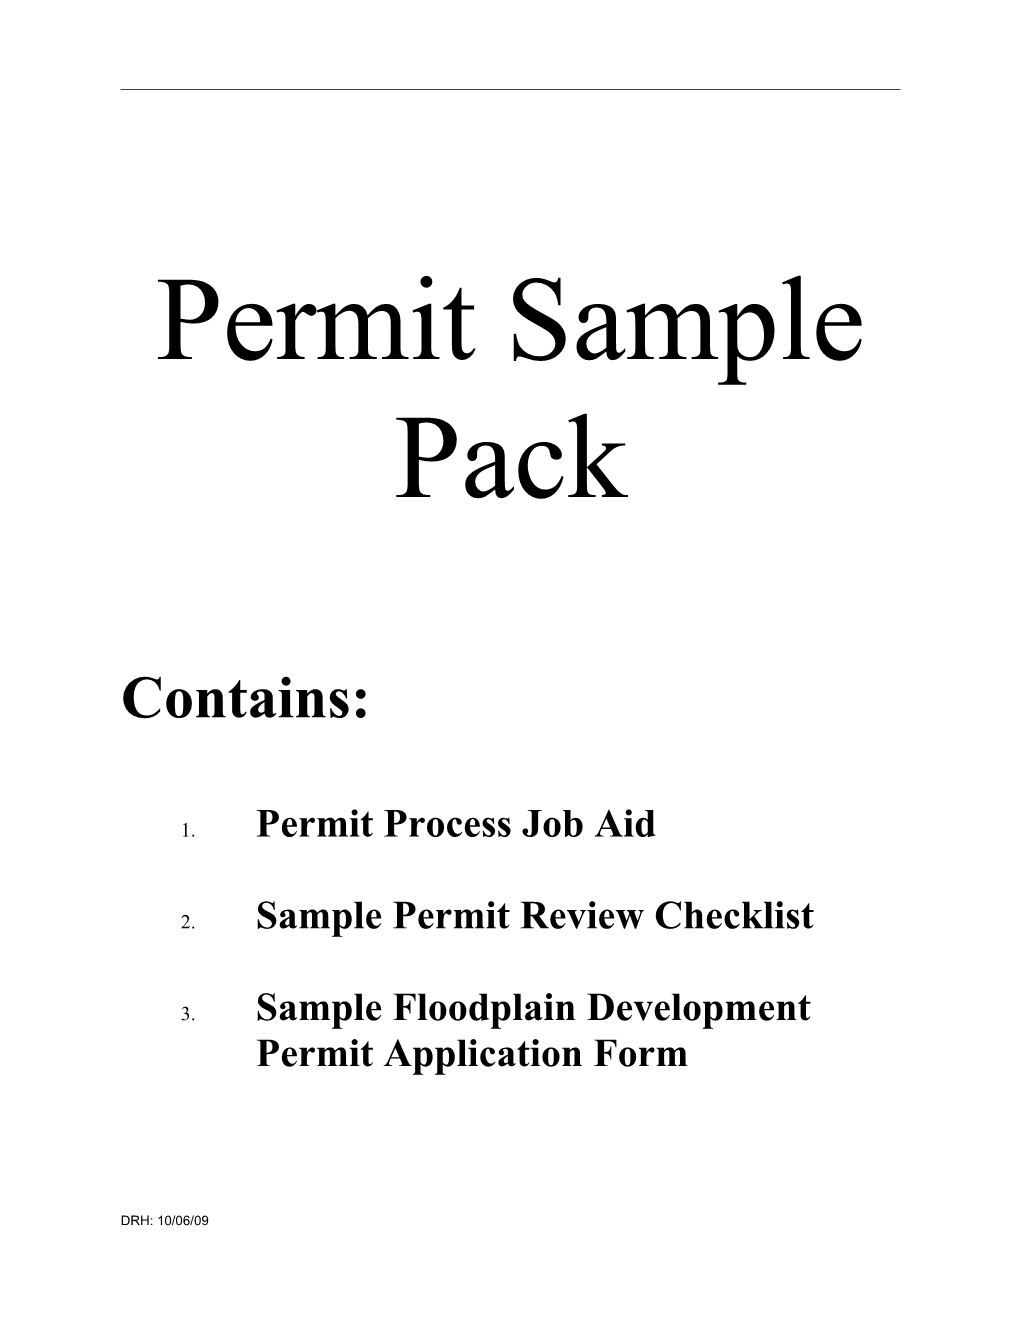 1. Permit Process Job Aid